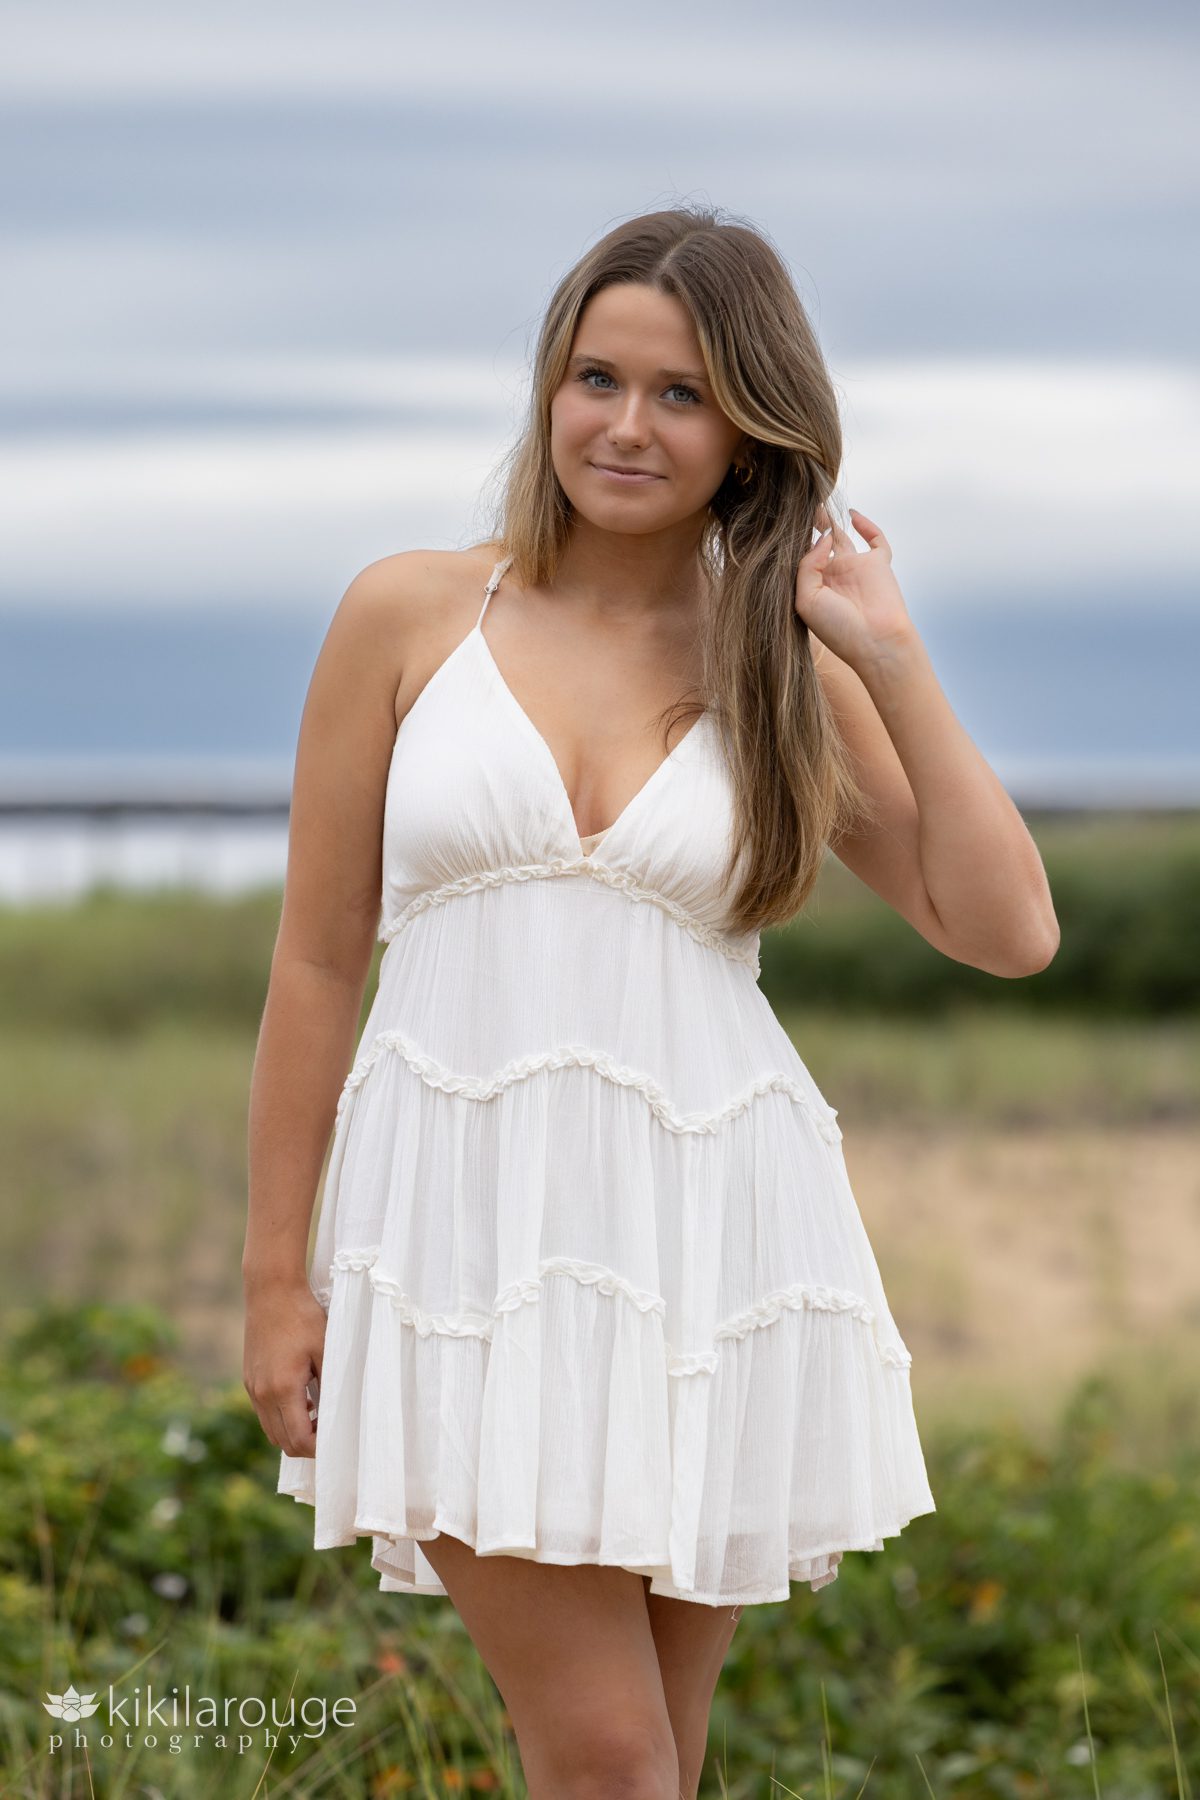 Teen senior girl in white dress dancing in beach dunes hand in hair